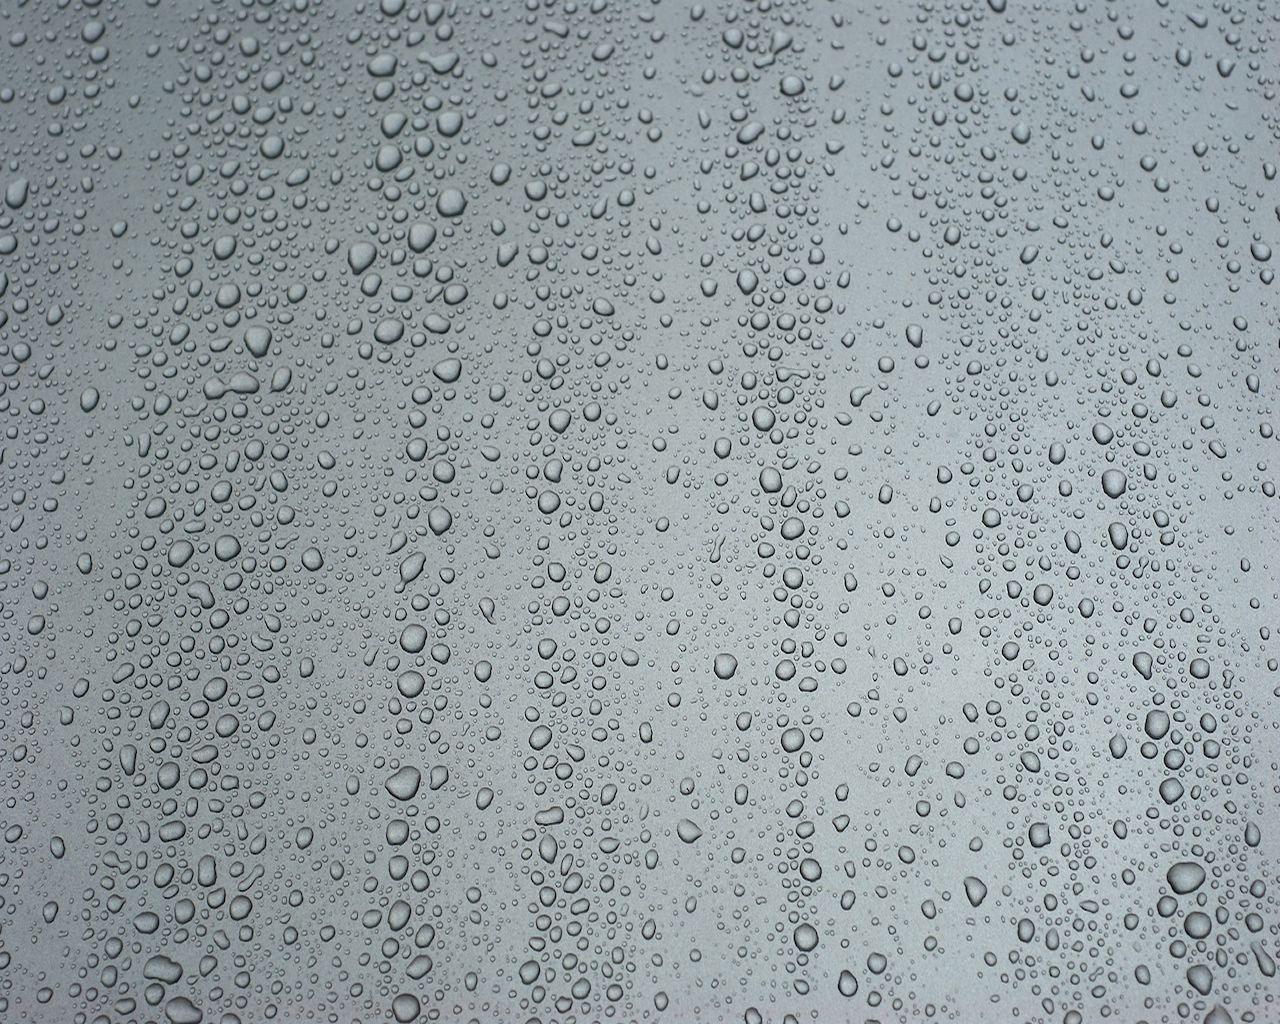  Raindrops Full HD Wallpaper